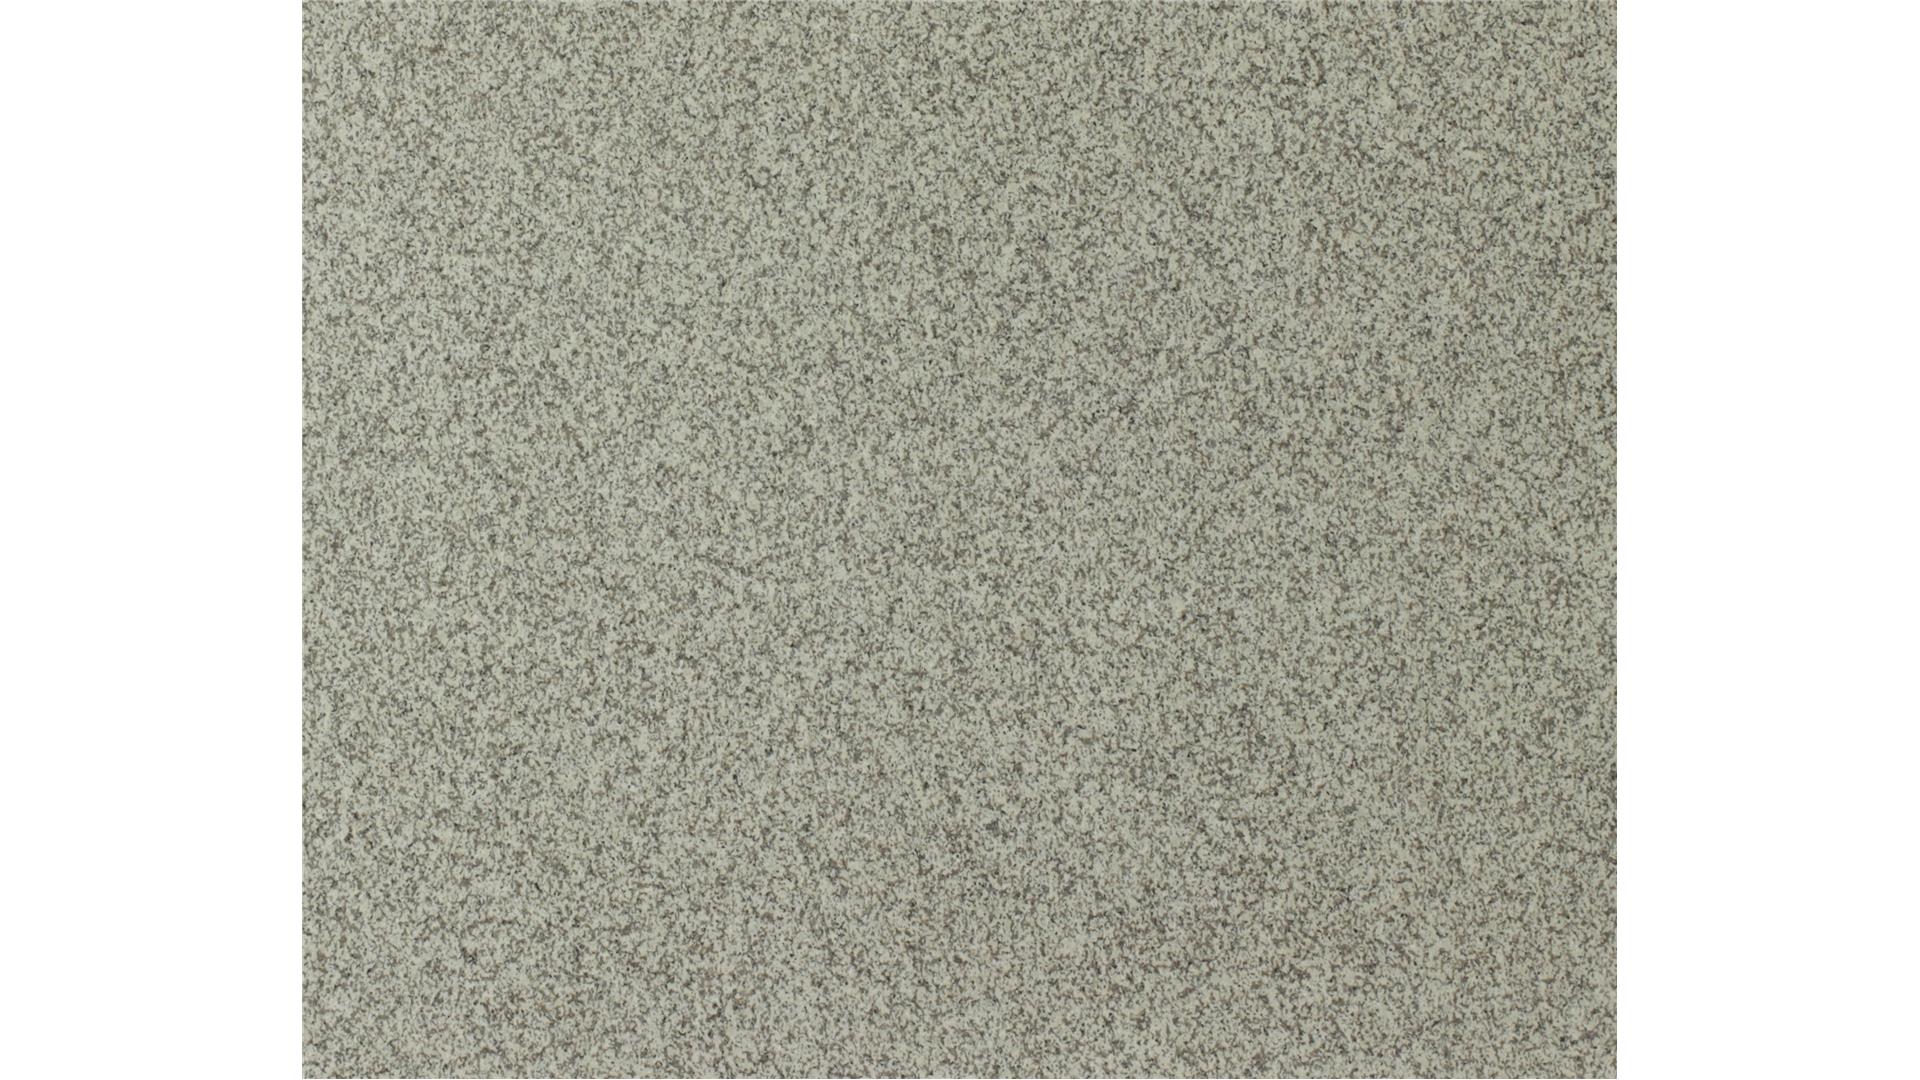 White Sand 3 cm DalTile Natural Stone Slabs